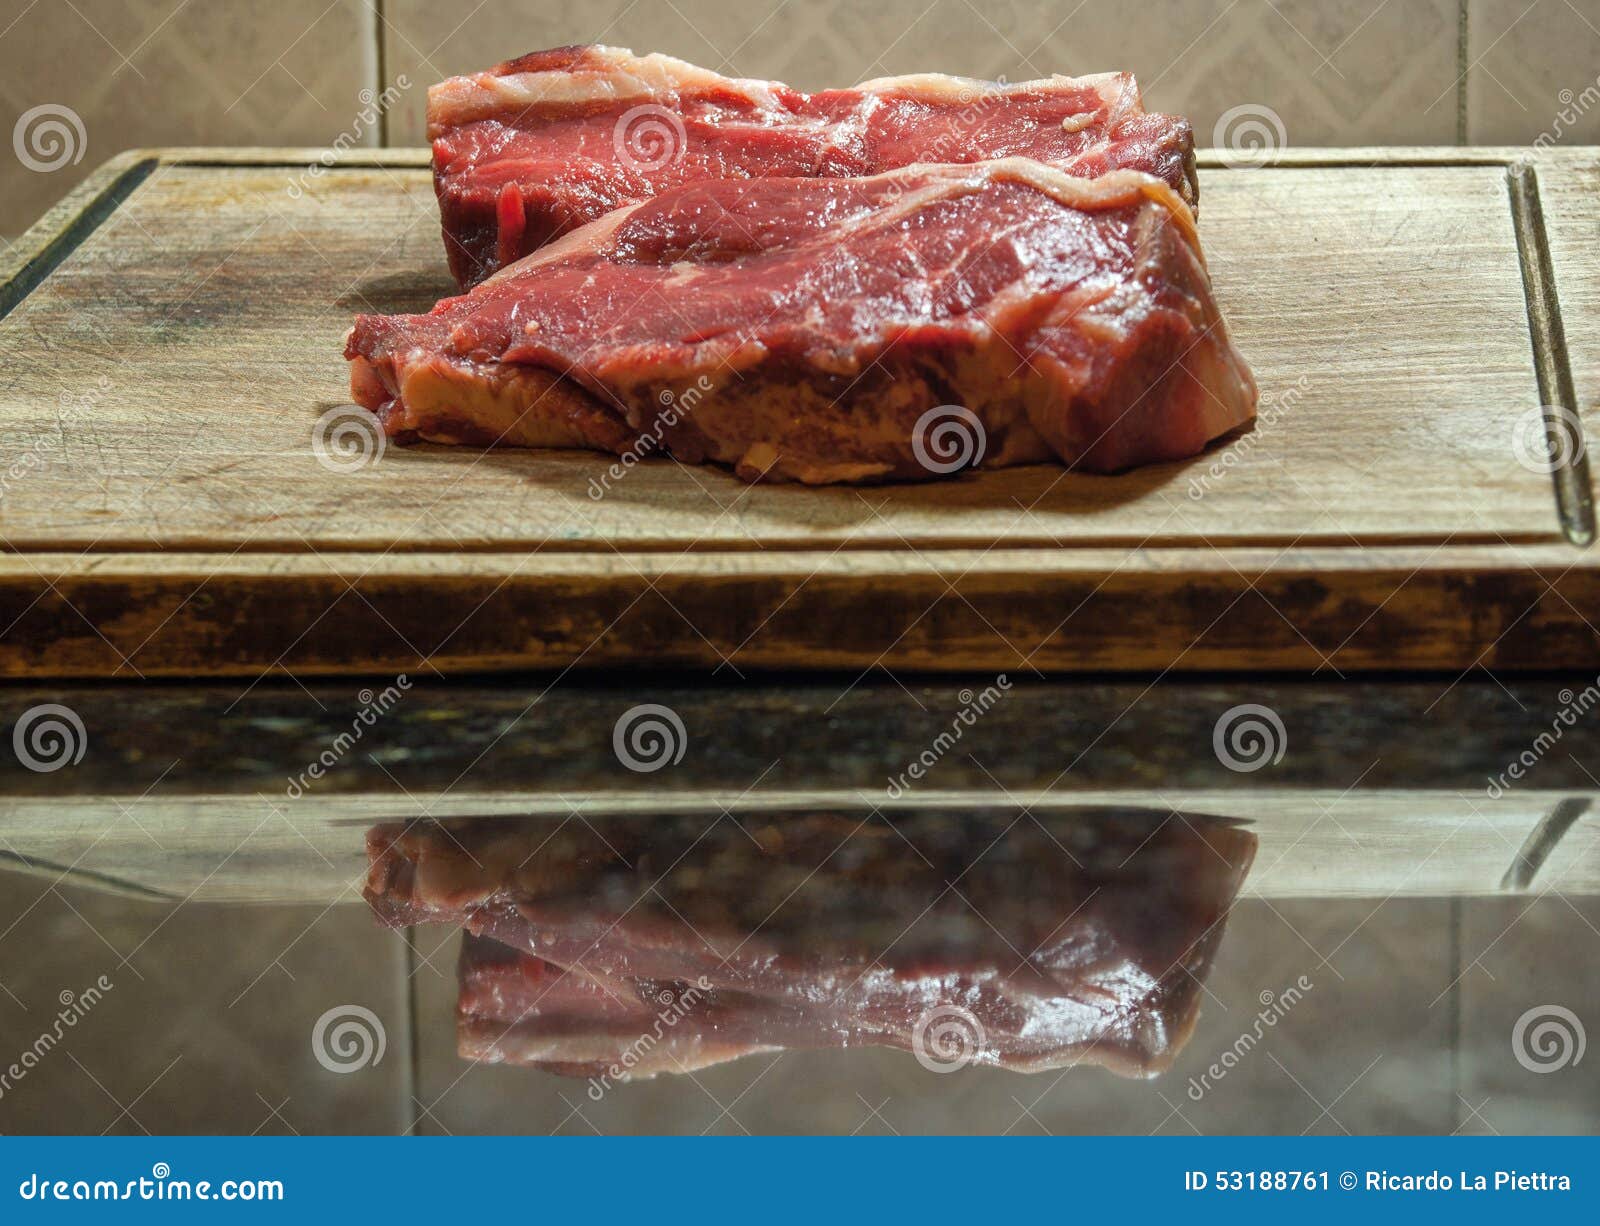 argentinian steak. typical argentina asado